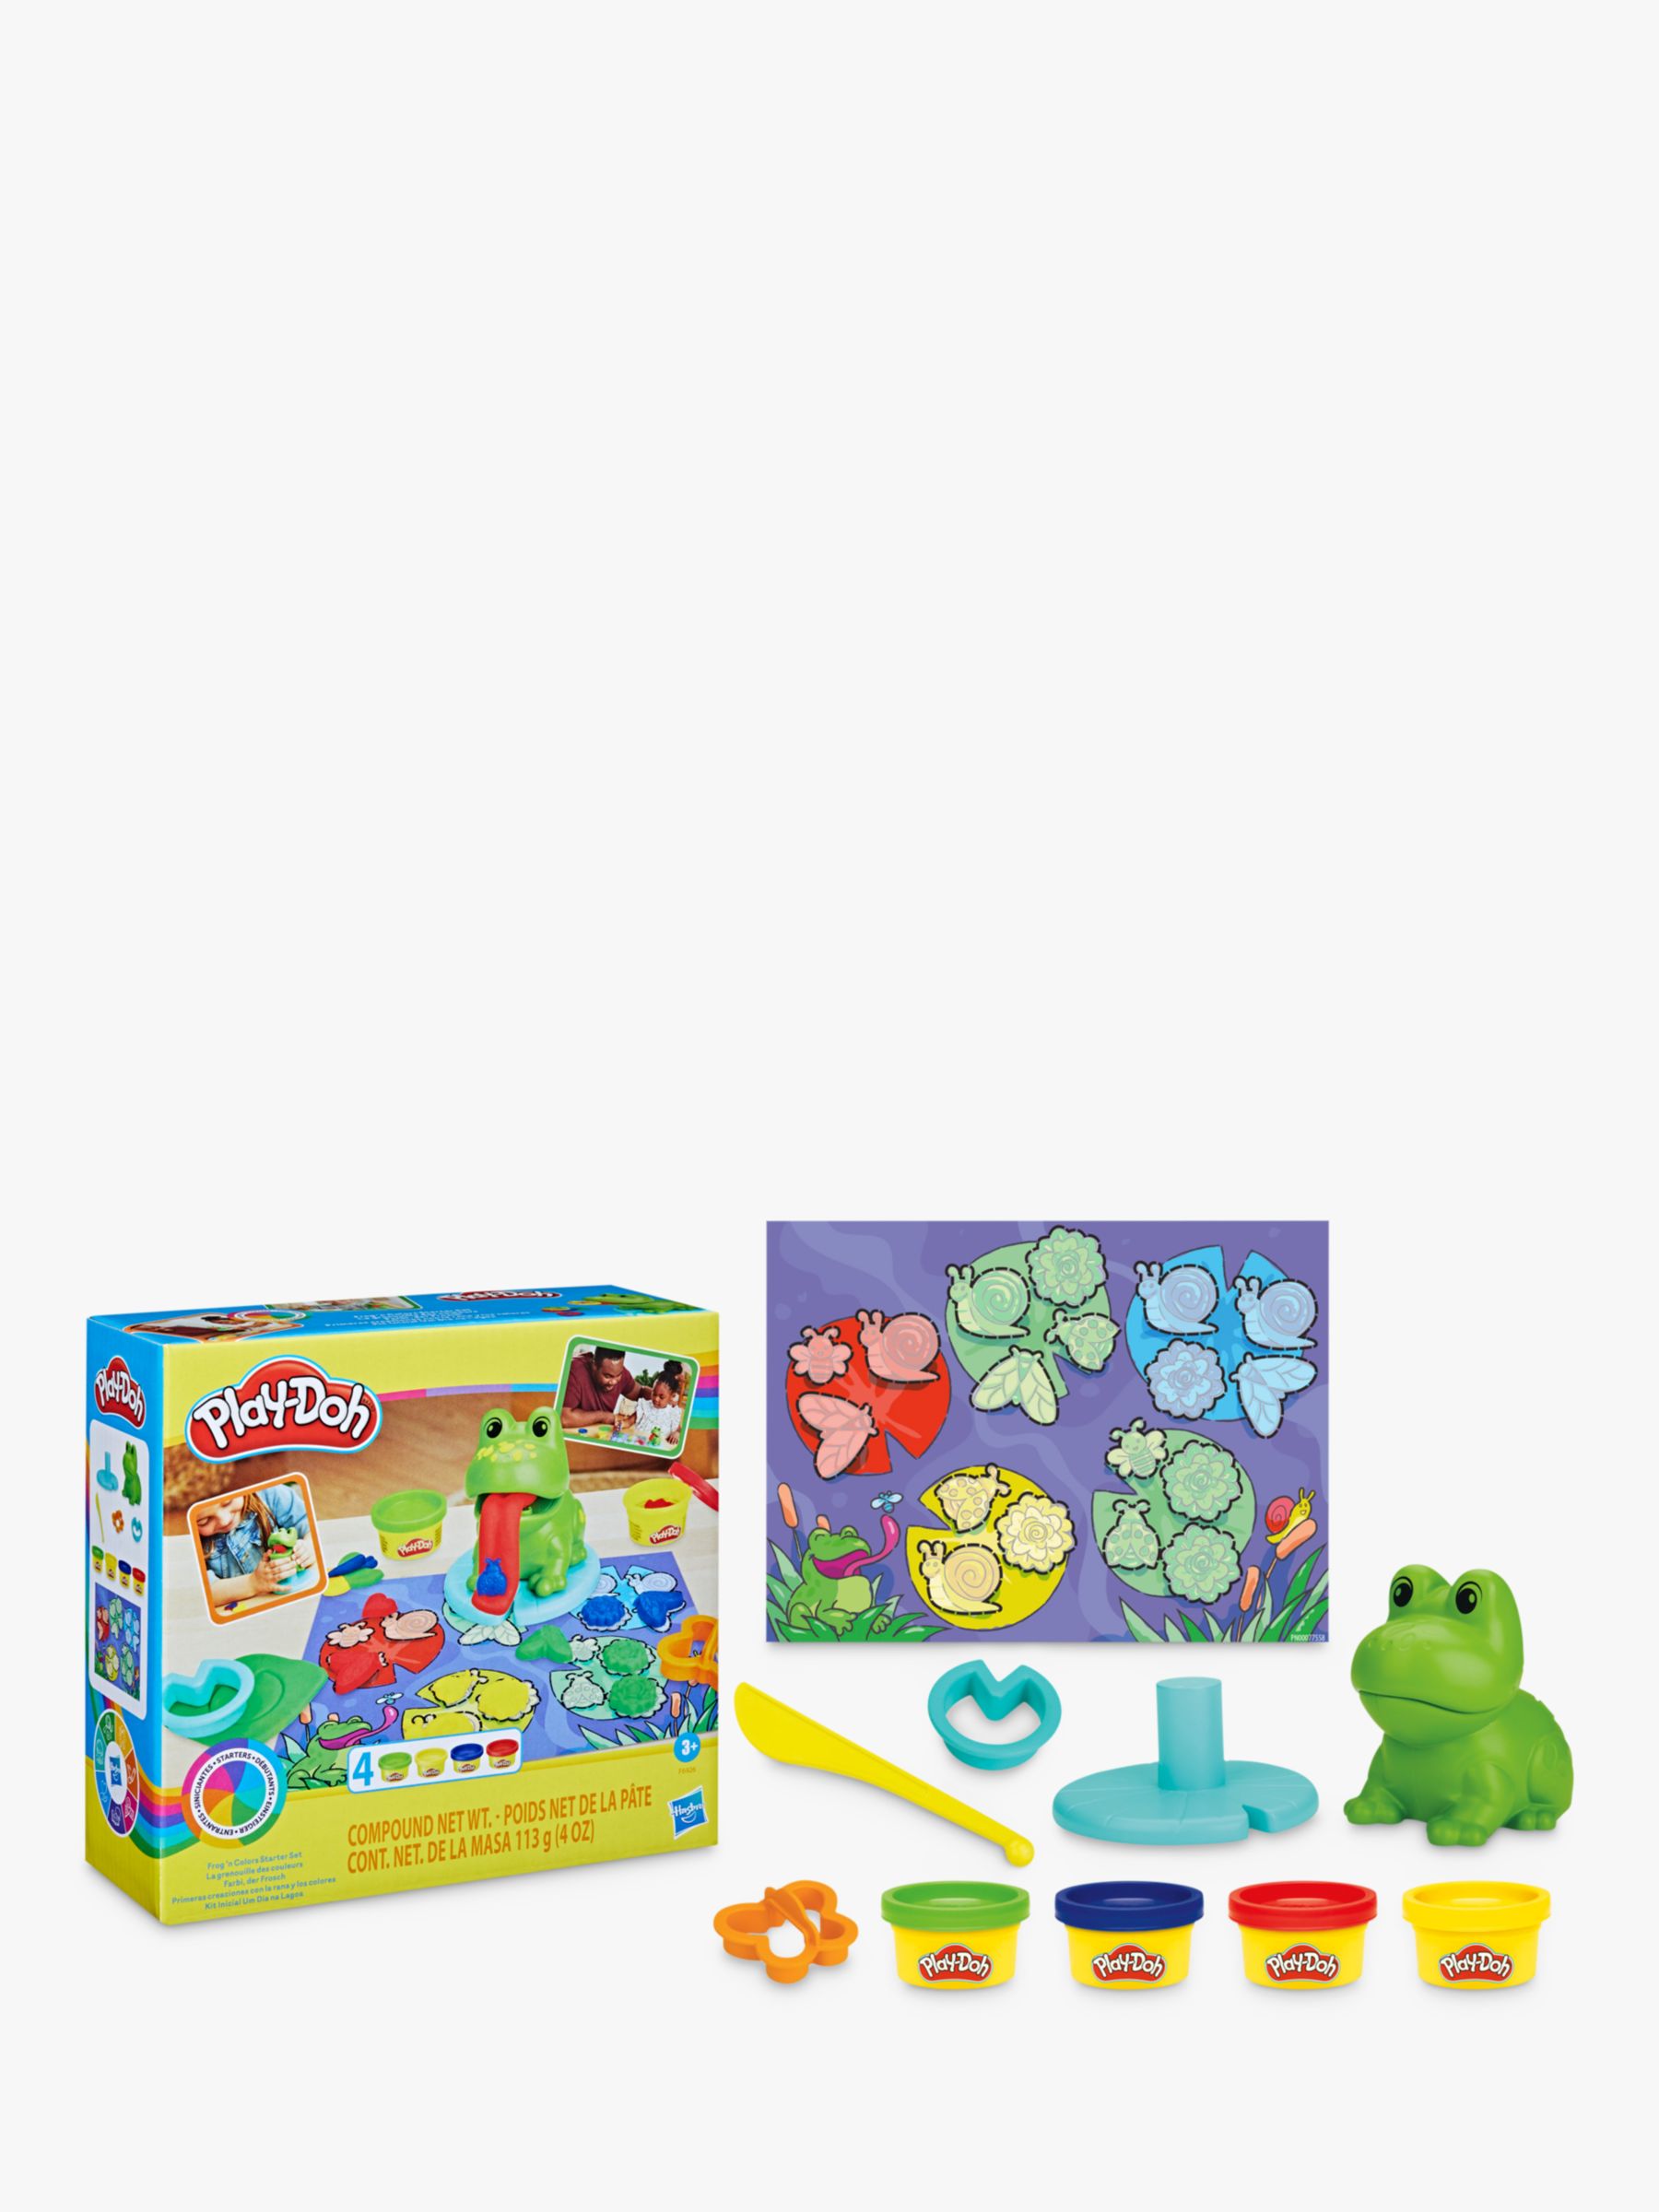 Play-Doh Starter Set - Play-Doh